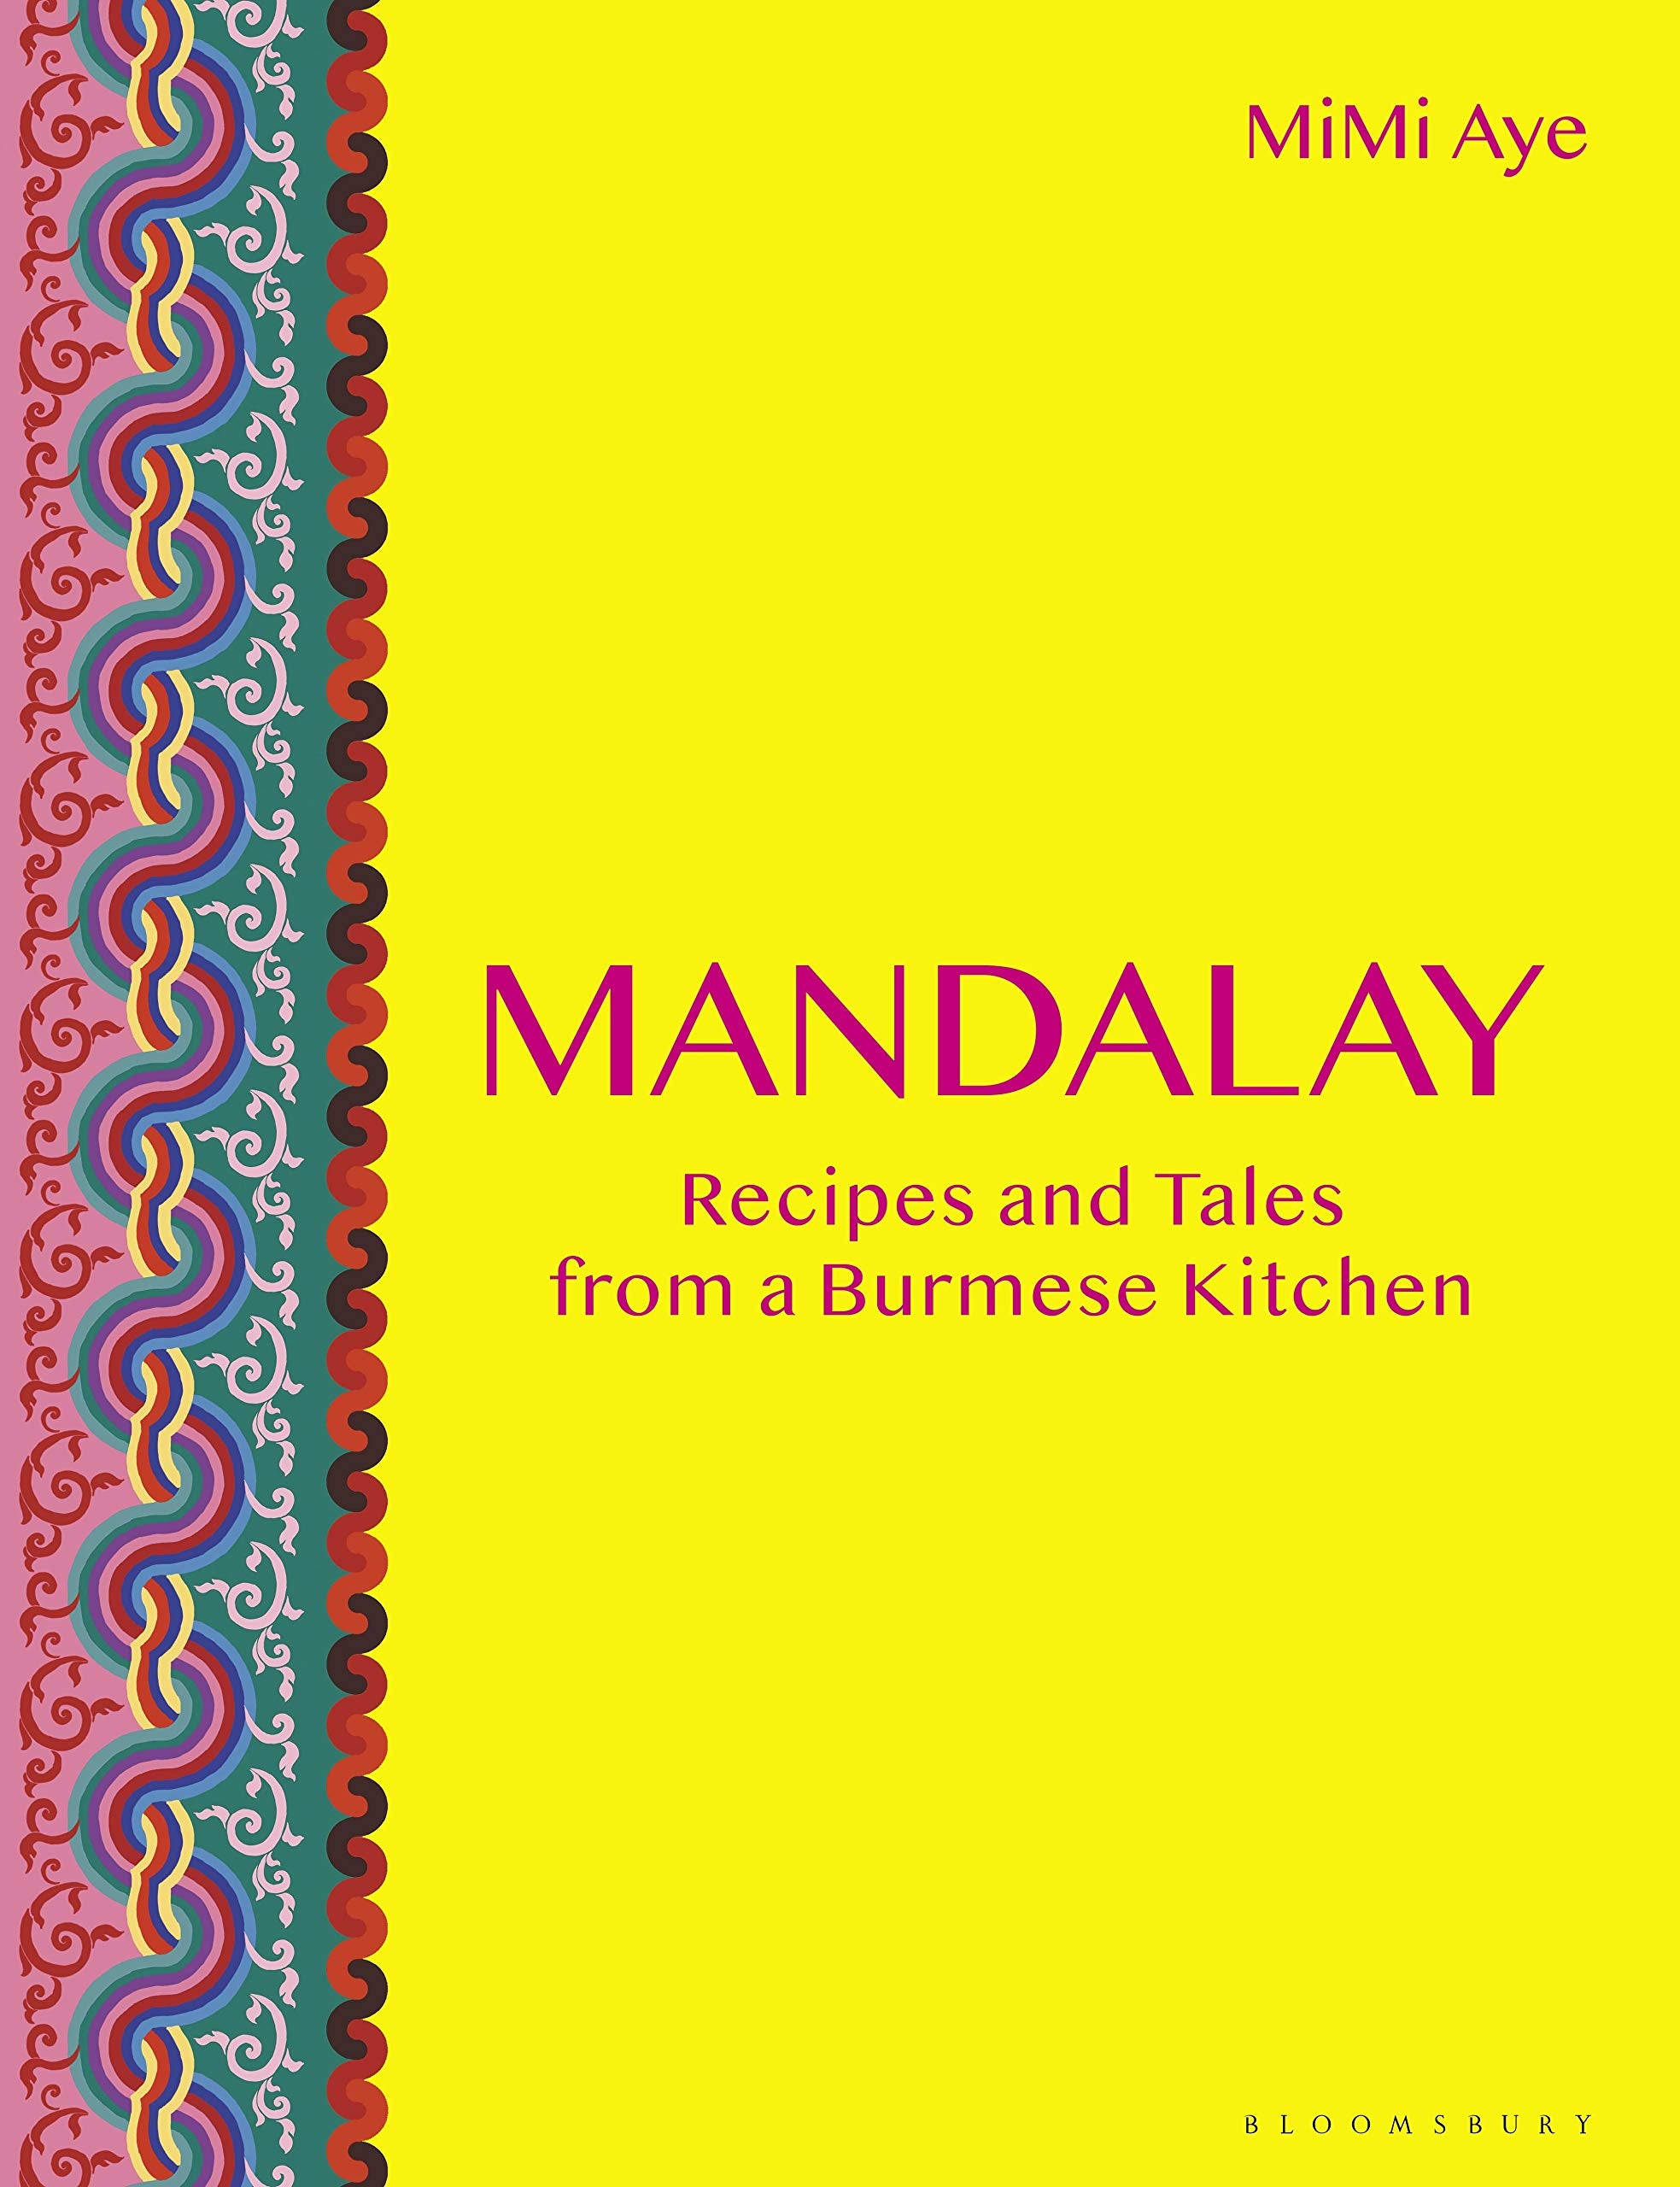 Mandalay: Recipes and Tales from a Burmese Kitchen (MiMi Aye)